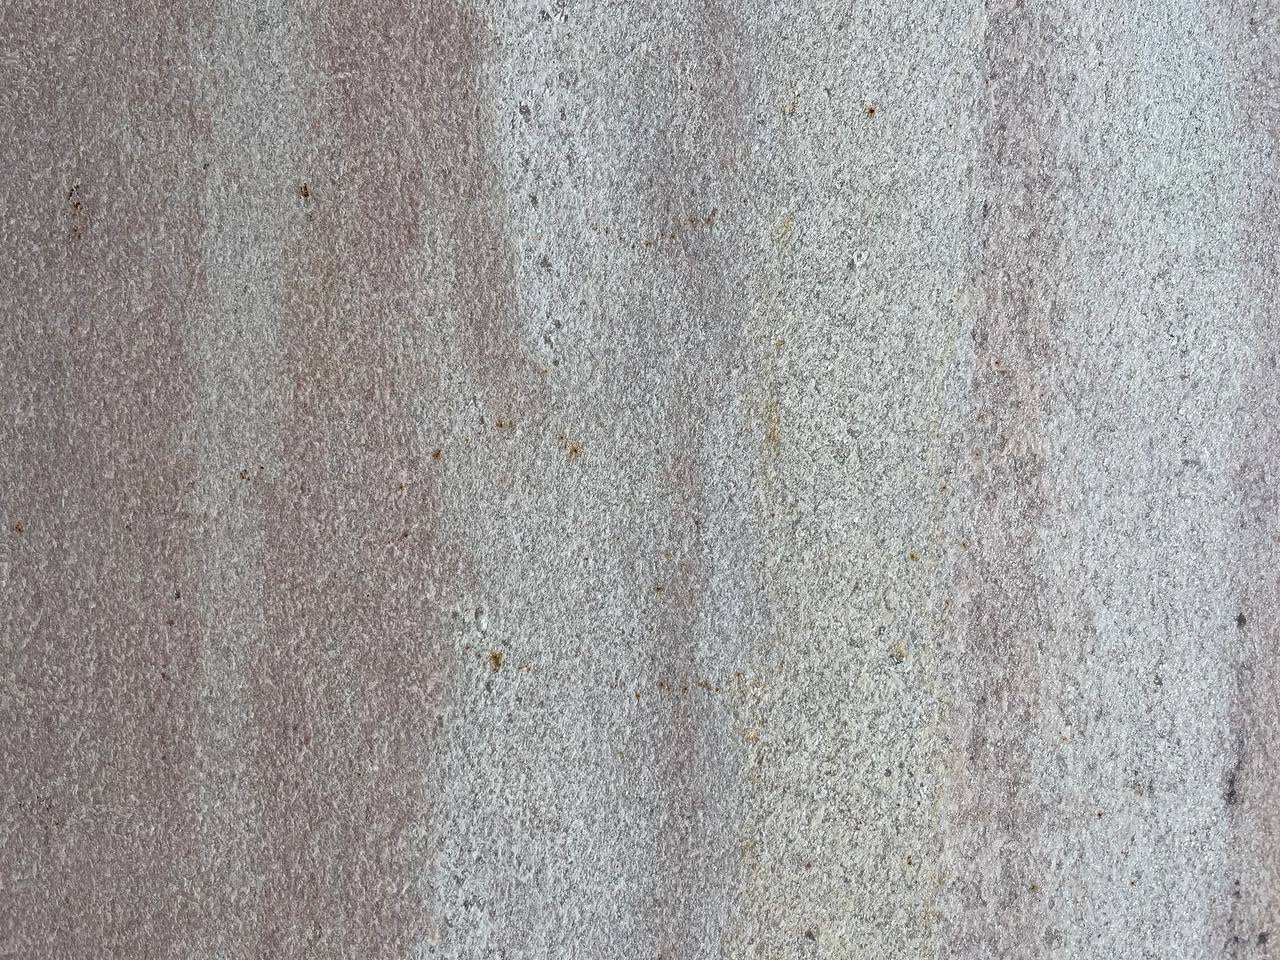 DAFFODIL YELLOW Quartzite gauged, natural - 18.5" x 18.5" Tile